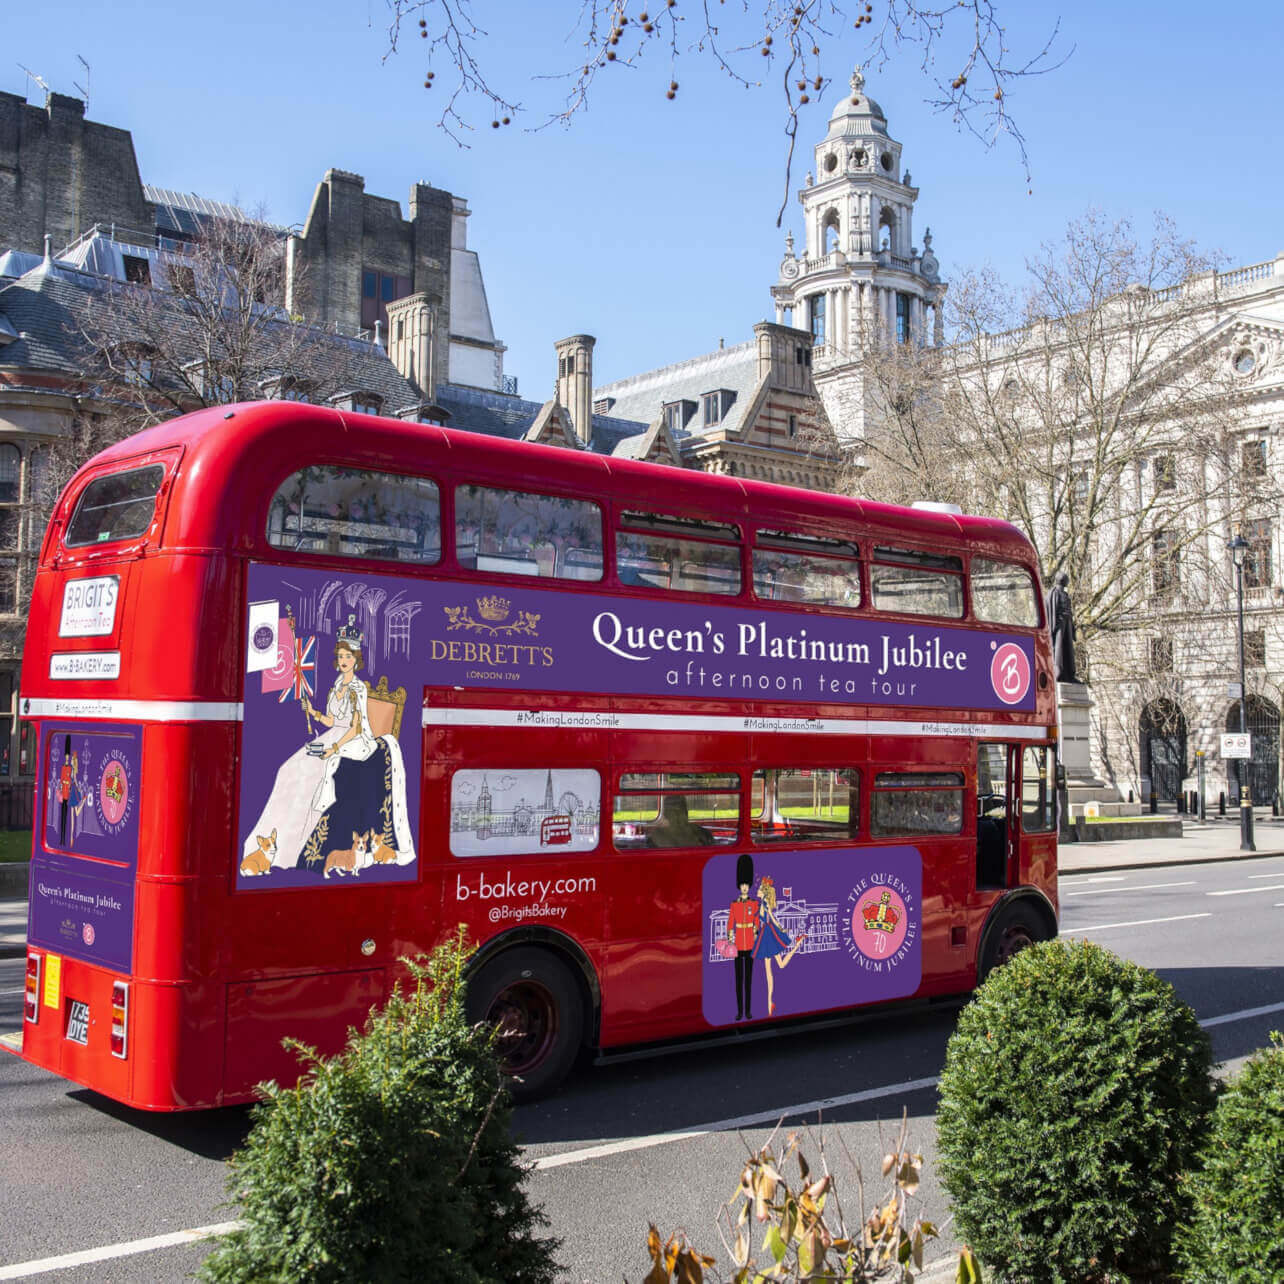 Queens Platinum Jubilee Afternoon Tea Bus Tour 